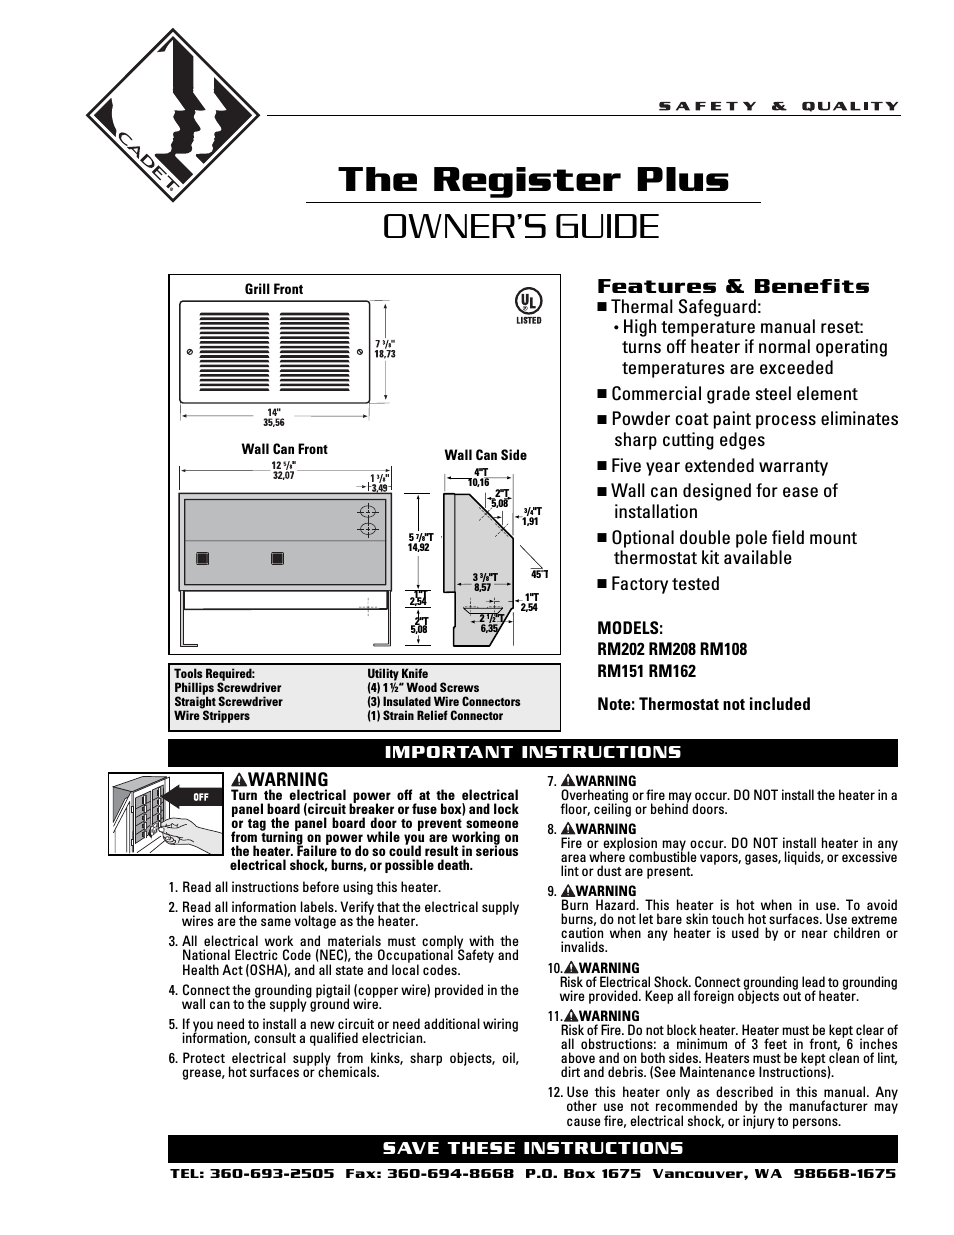 The Register Plus RM108